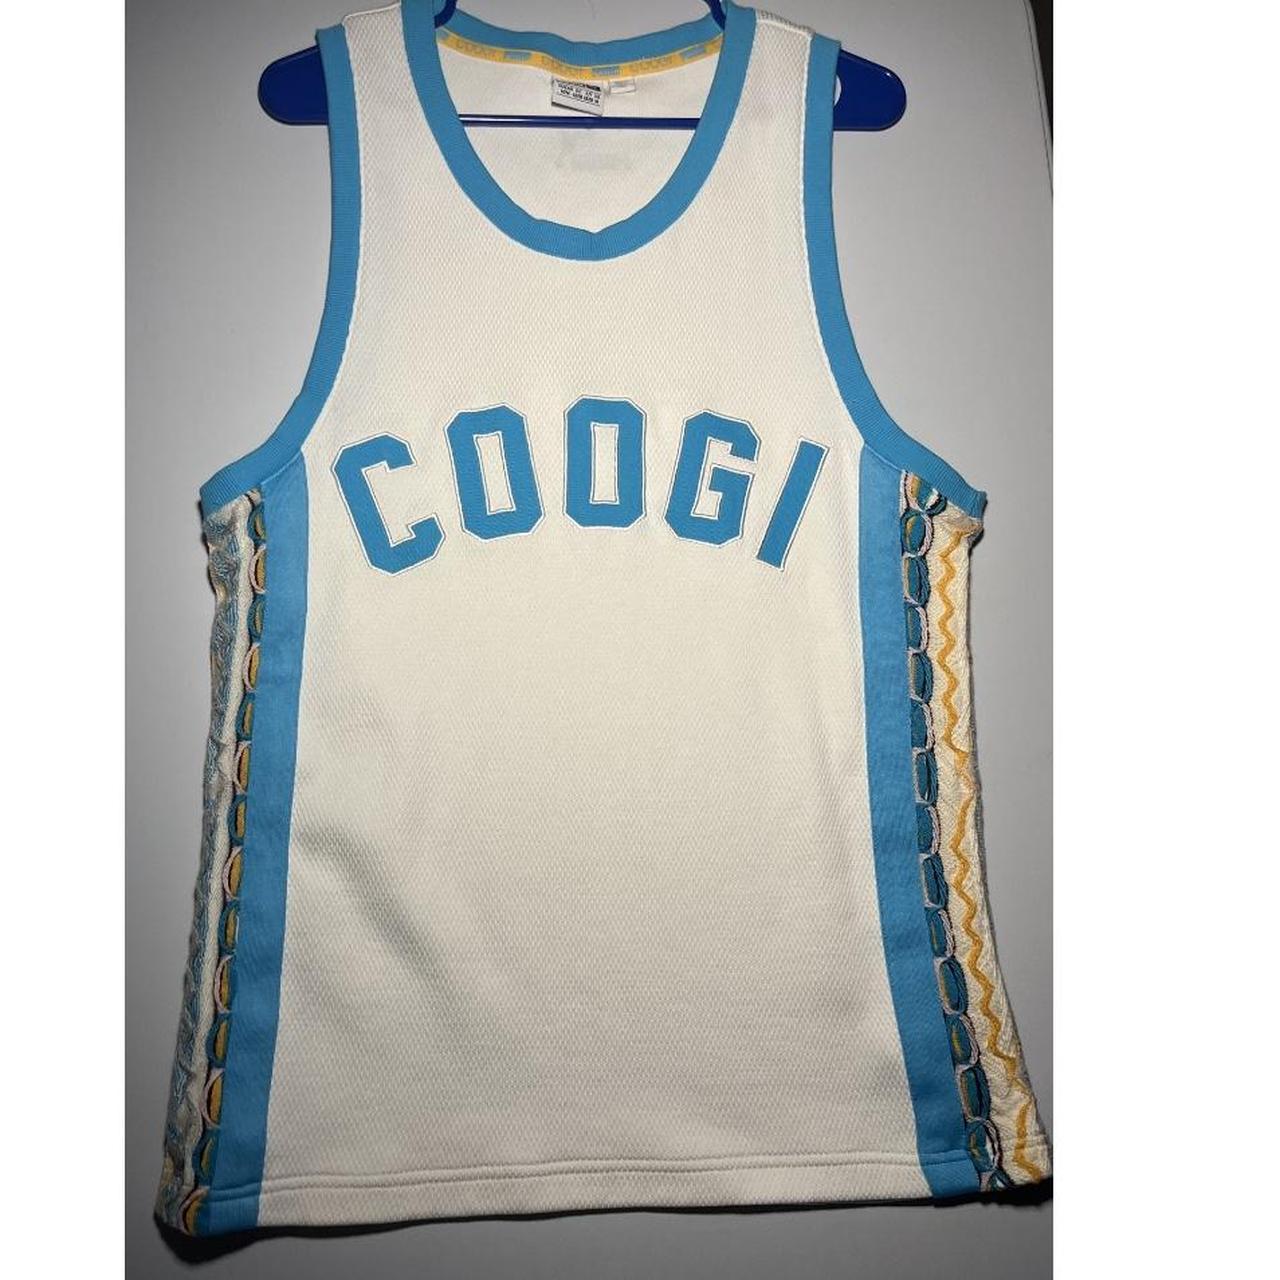 Coogi puma jersey Coogi fabric on both side left /... - Depop